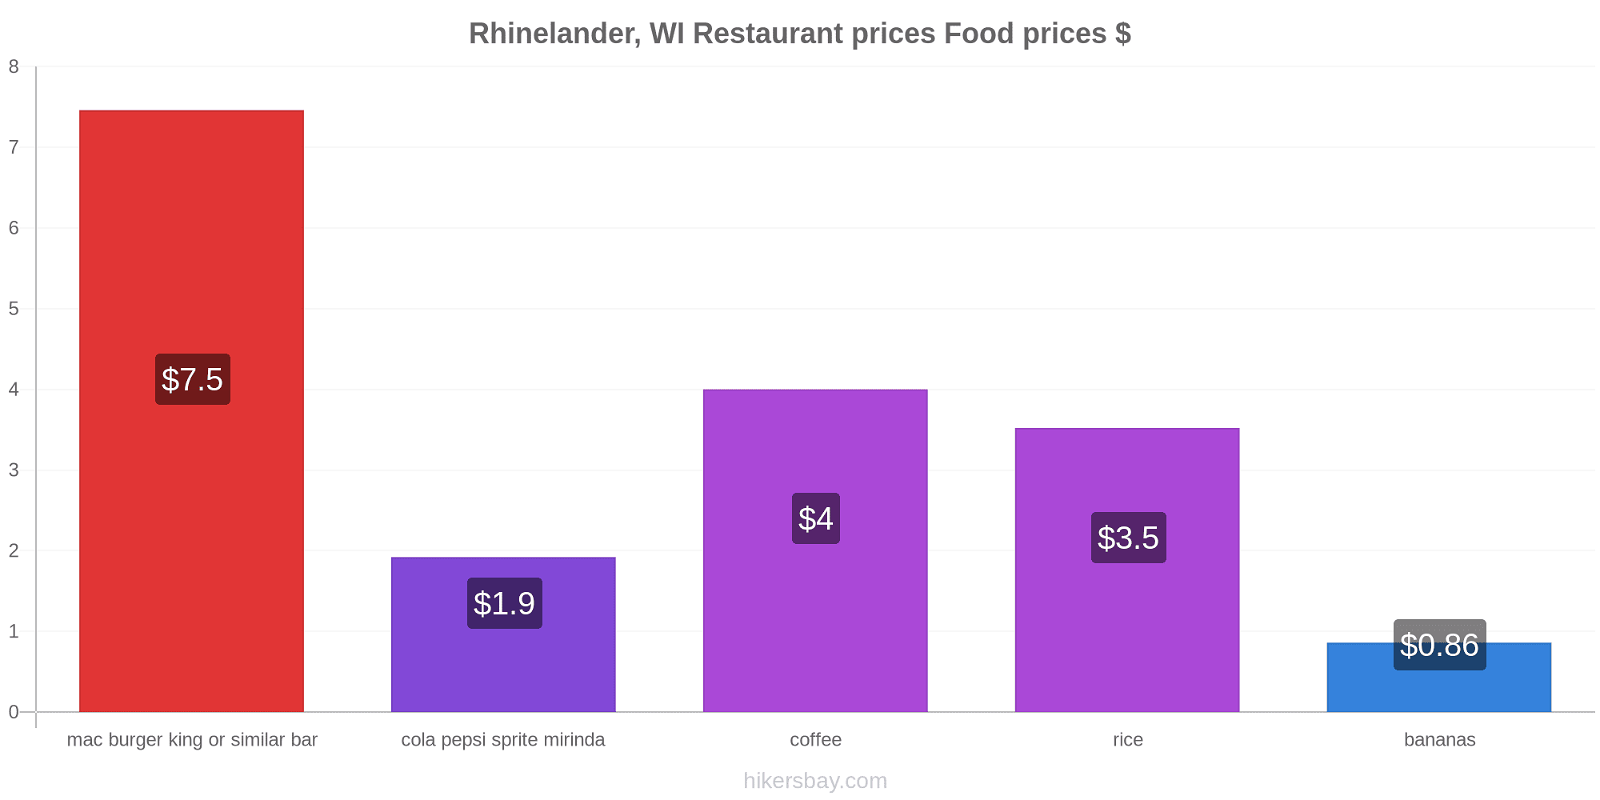 Rhinelander, WI price changes hikersbay.com